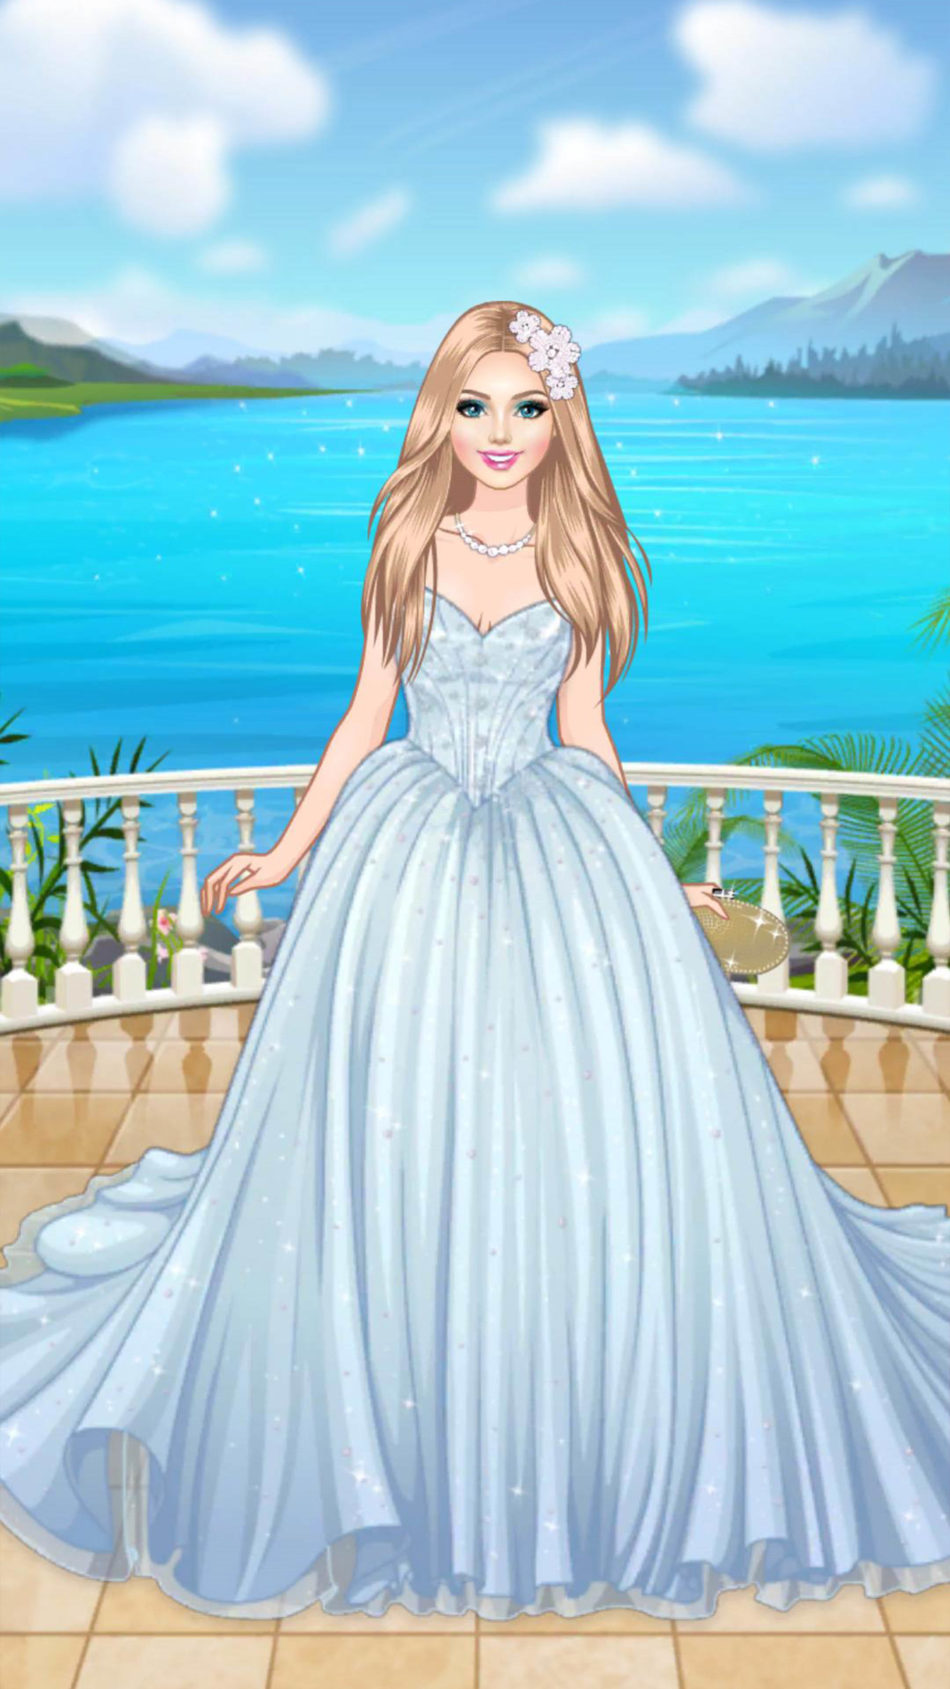 Beautiful Fairy Girl In Wedding Dress Free 4K Ultra HD 